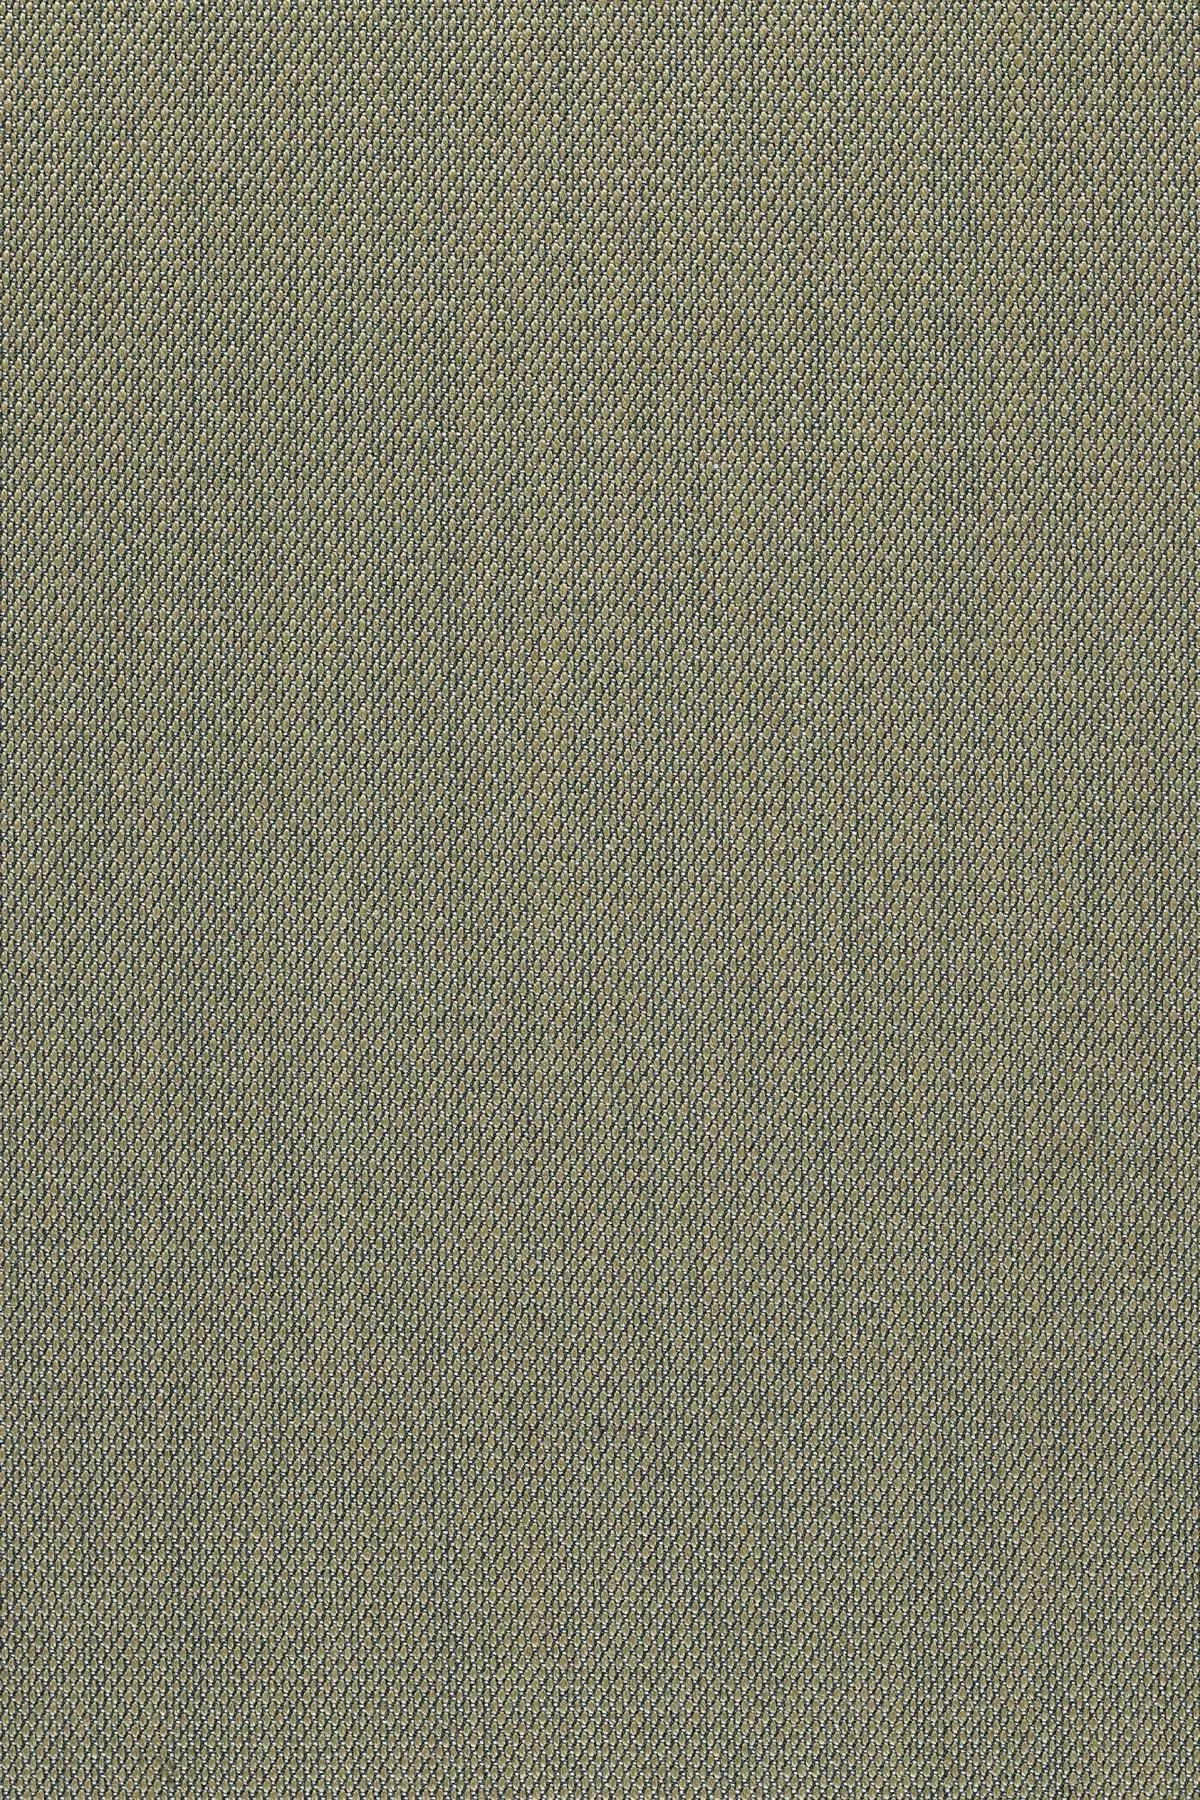 Fabric sample Steelcut Trio 3 253 brown